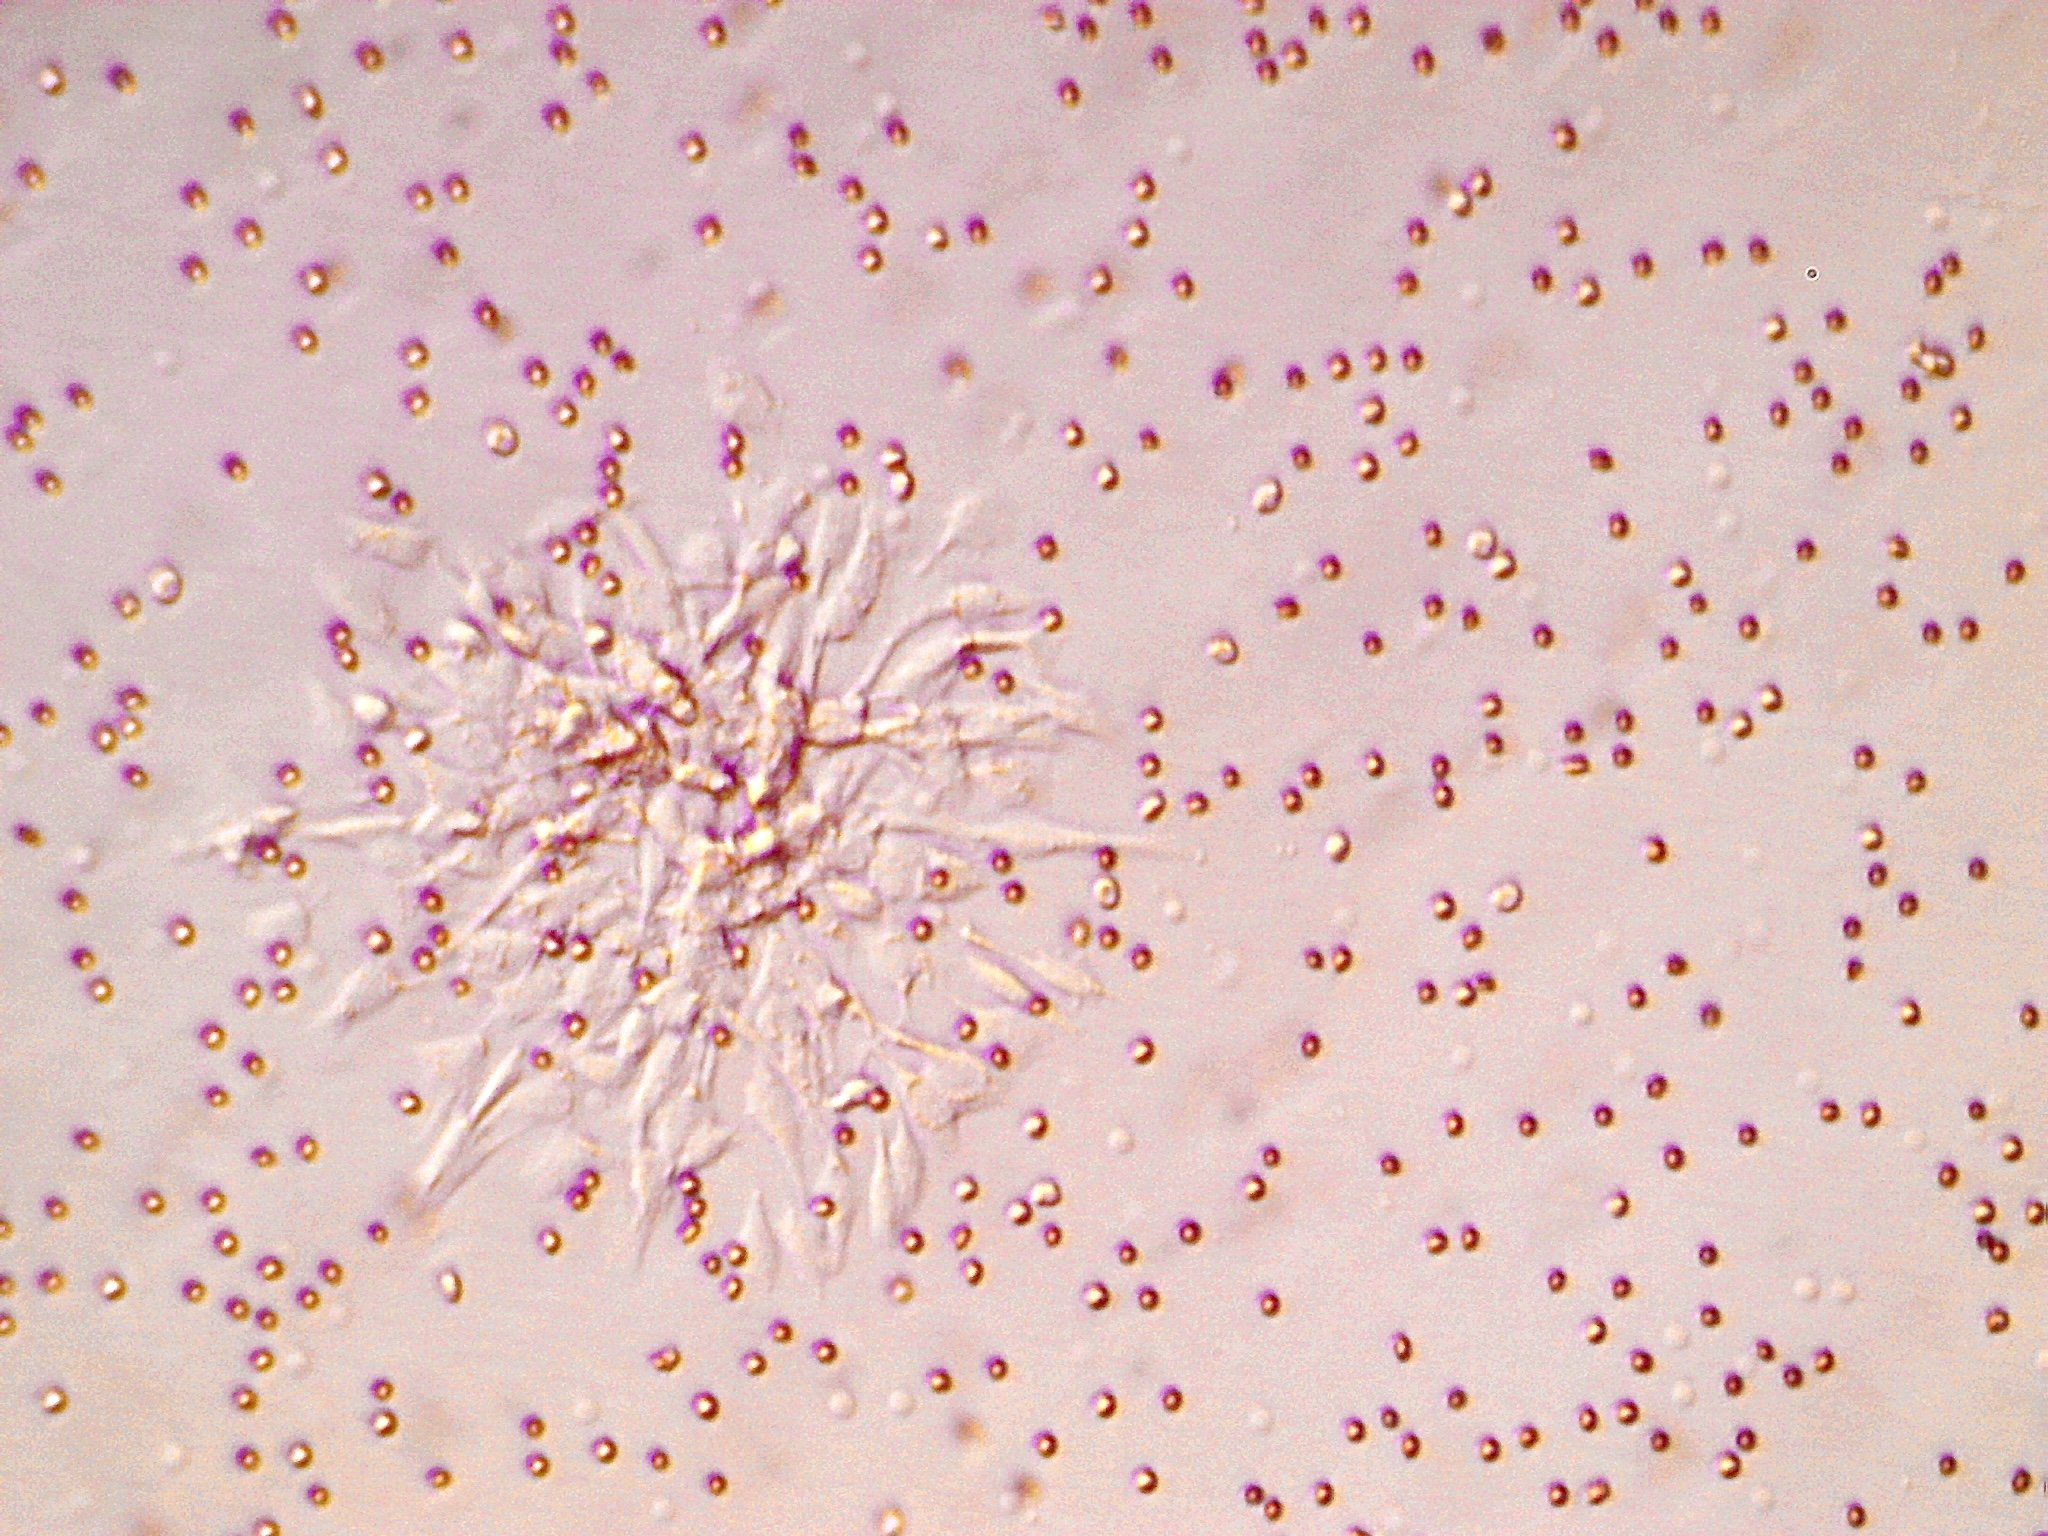 Jiabao Li cell grow from menstrual blood.jpg